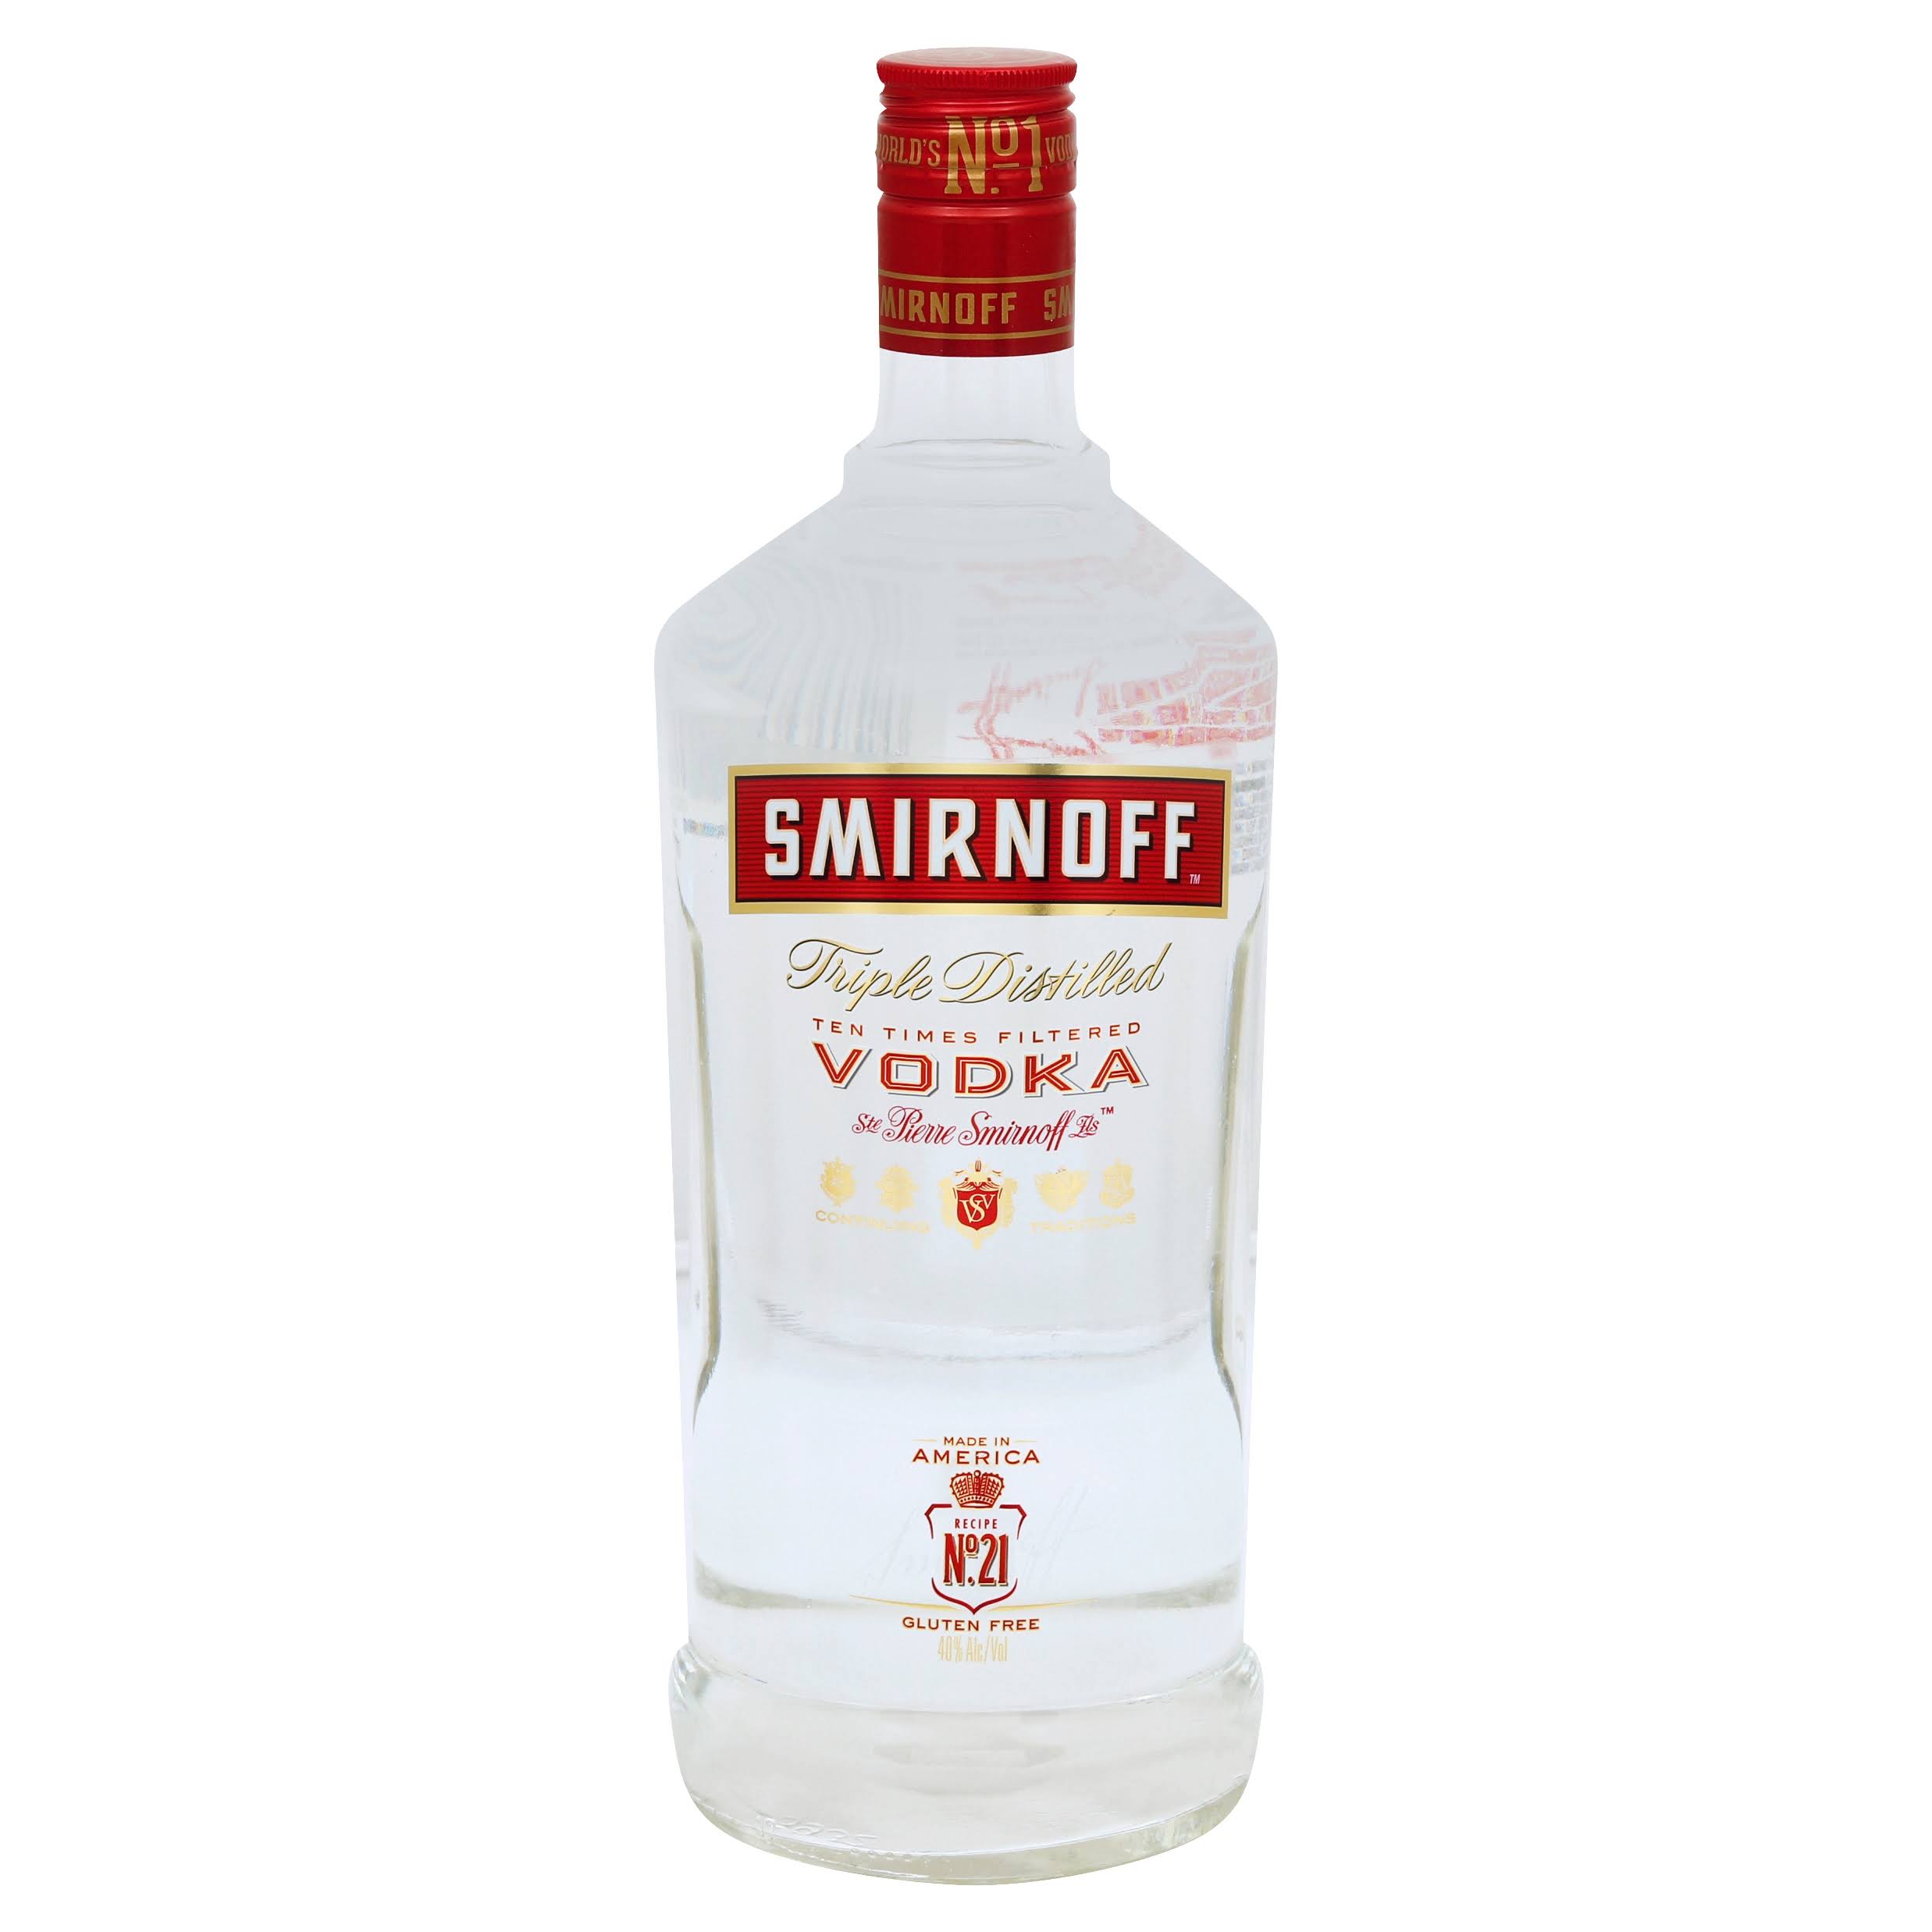 Smirnoff Vodka, Triple Distilled, Recipe No. 21 - 1.5 l